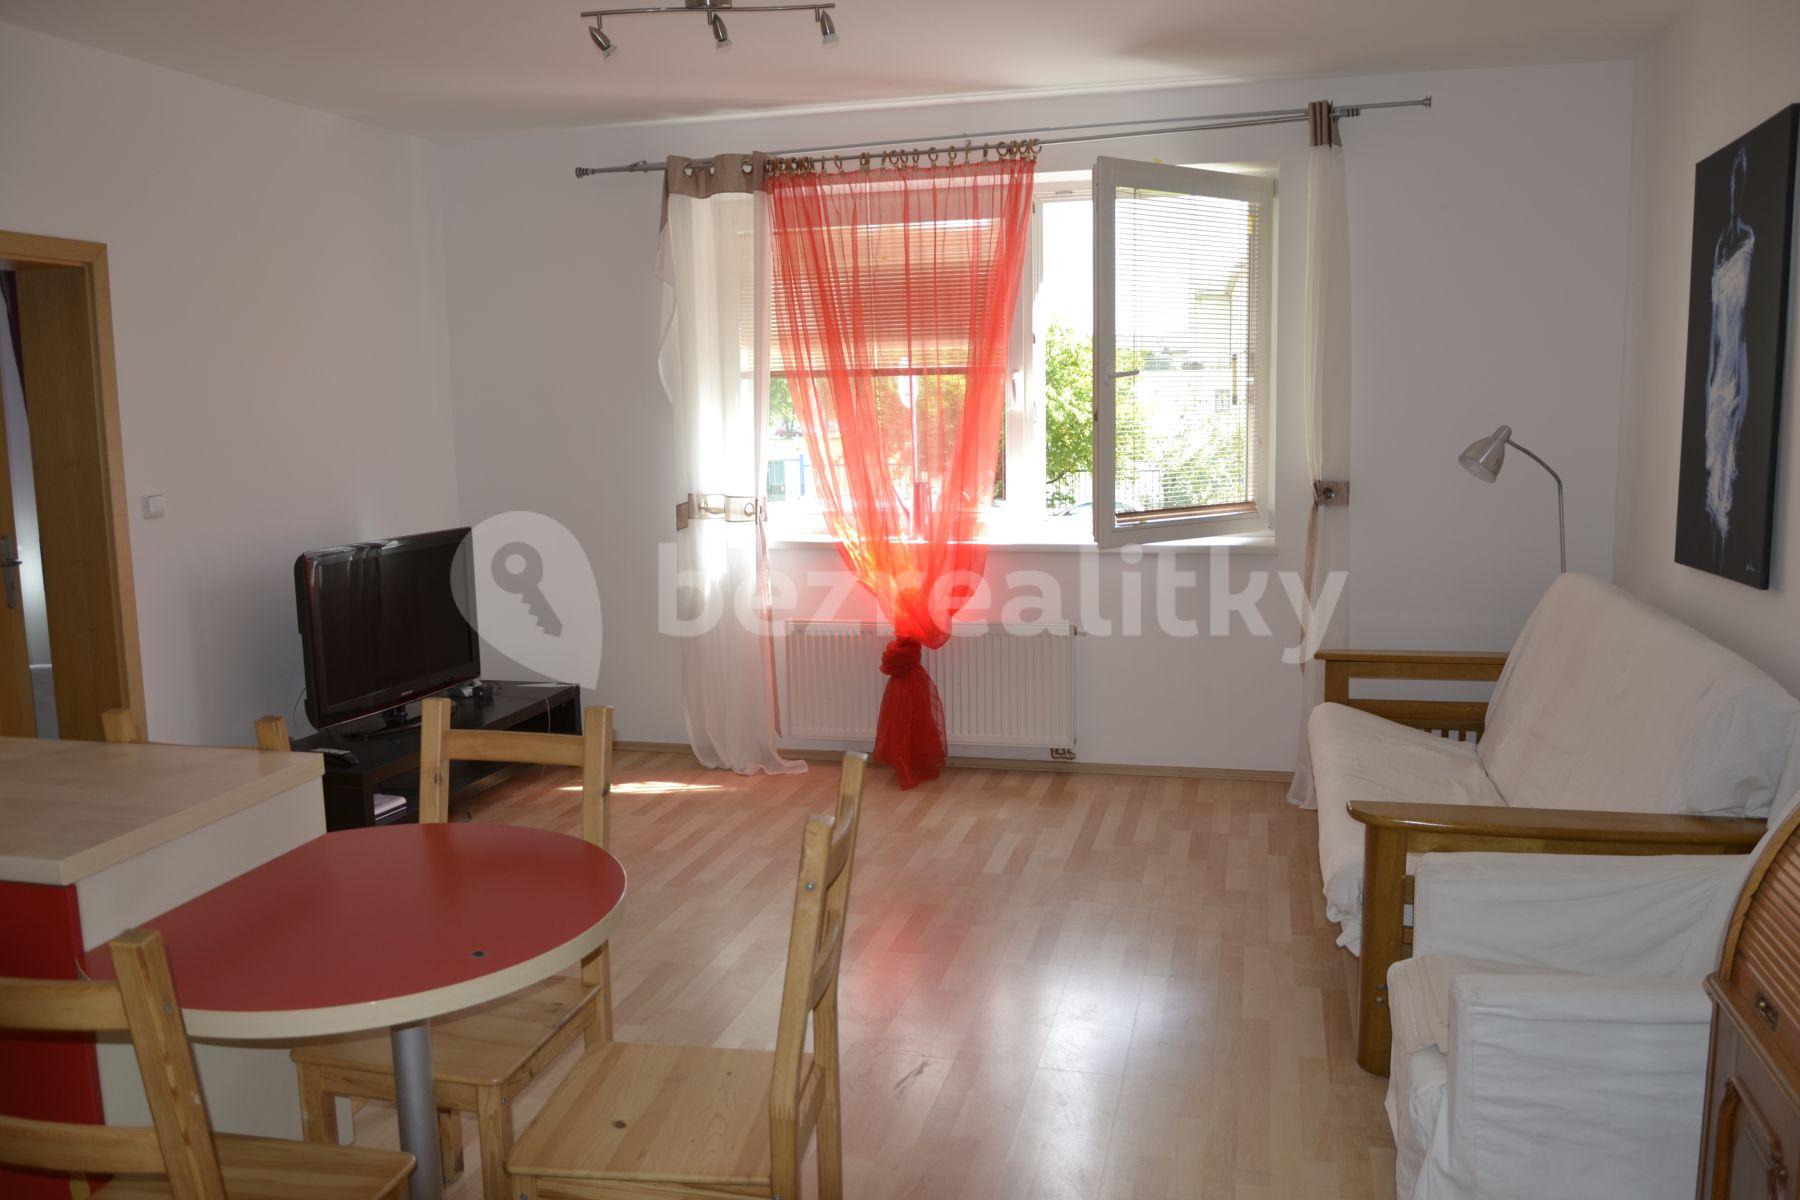 1 bedroom with open-plan kitchen flat to rent, 58 m², Rejchova, Prague, Prague